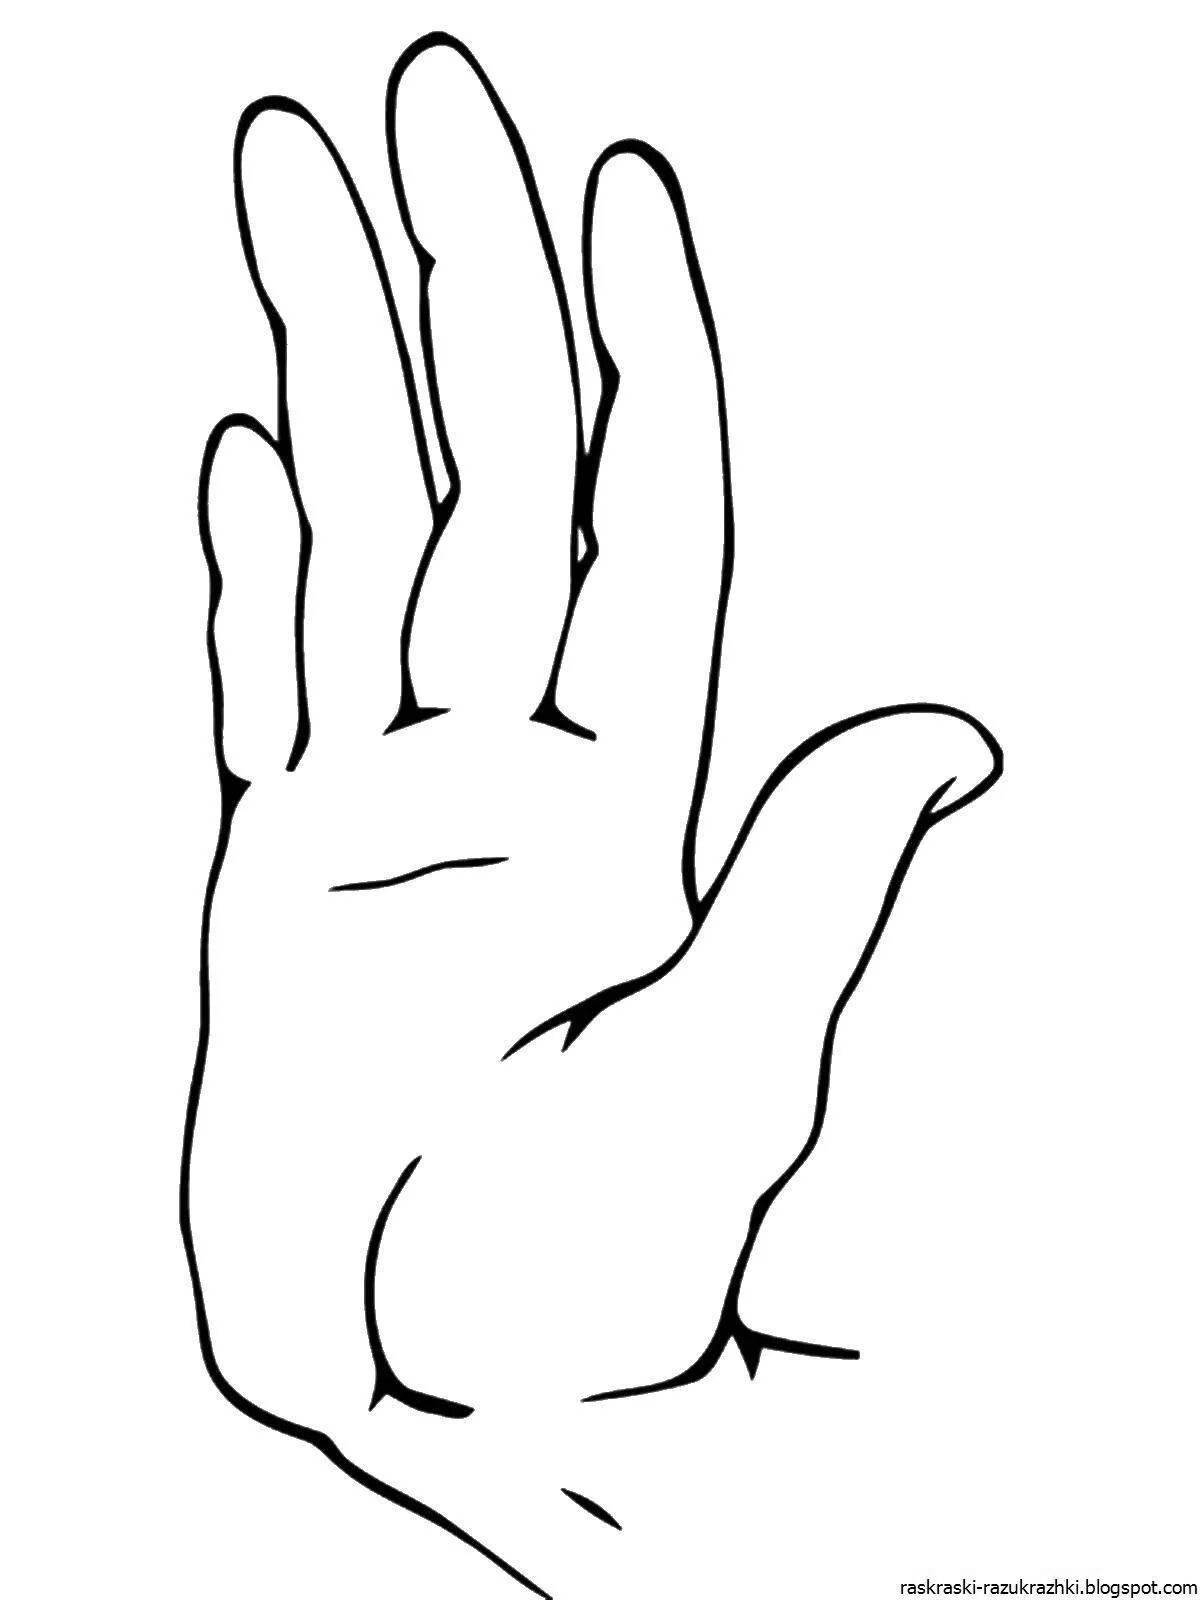 Human hand #7